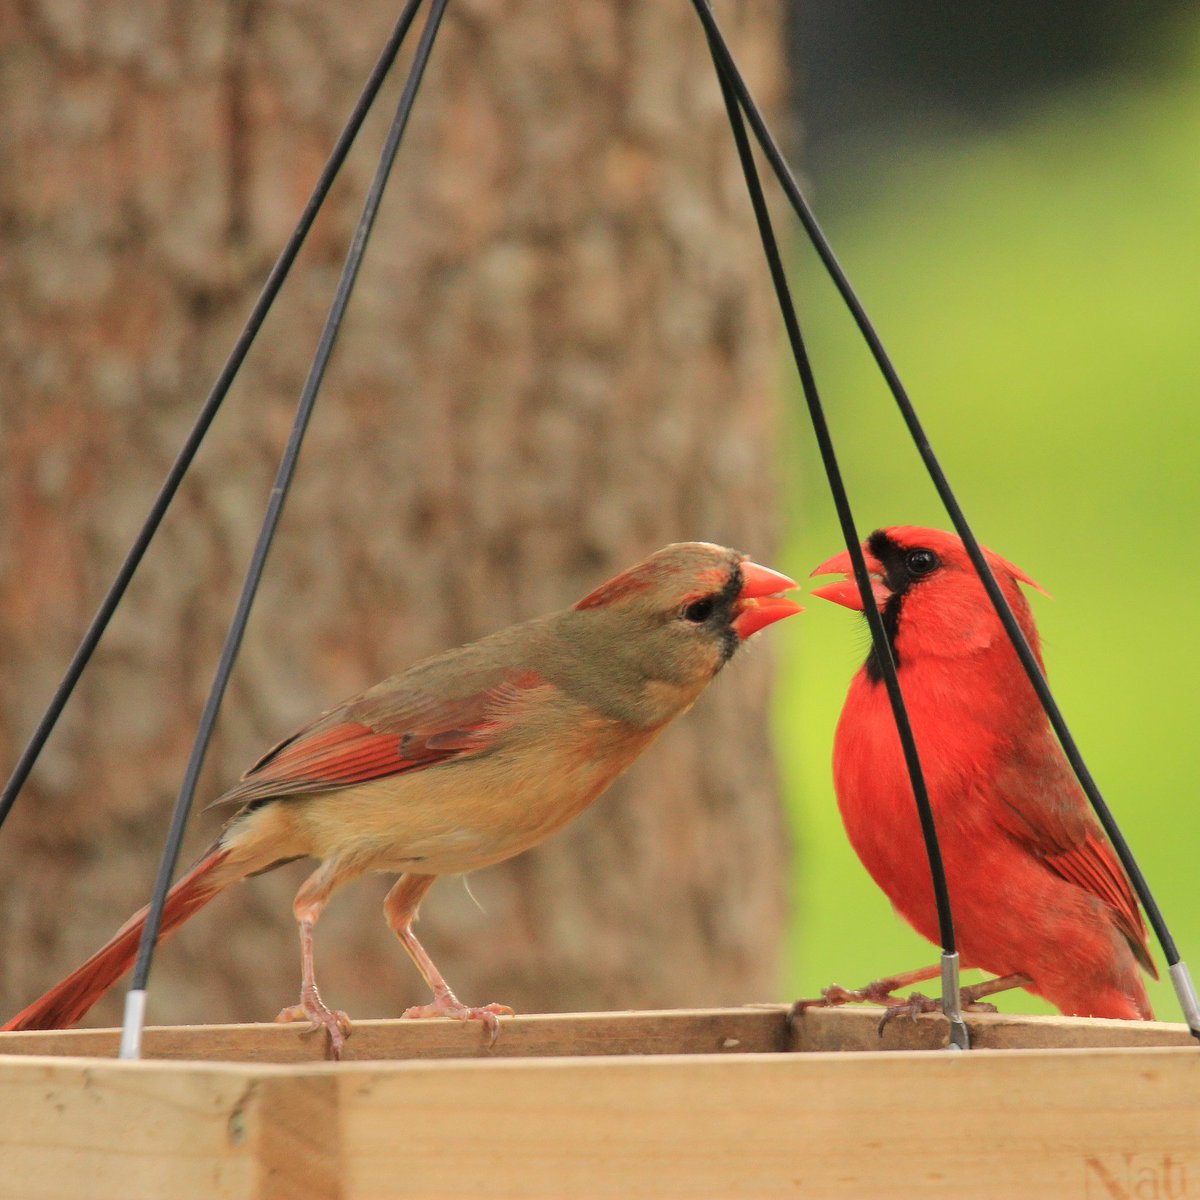 Such darlings! ❤
#cardinals #cardinal #courting #courtship #cardinalcourtship #feedingtime #springtimevibes #springtime #birdbehavior #birdbehaviors #ohiobirding